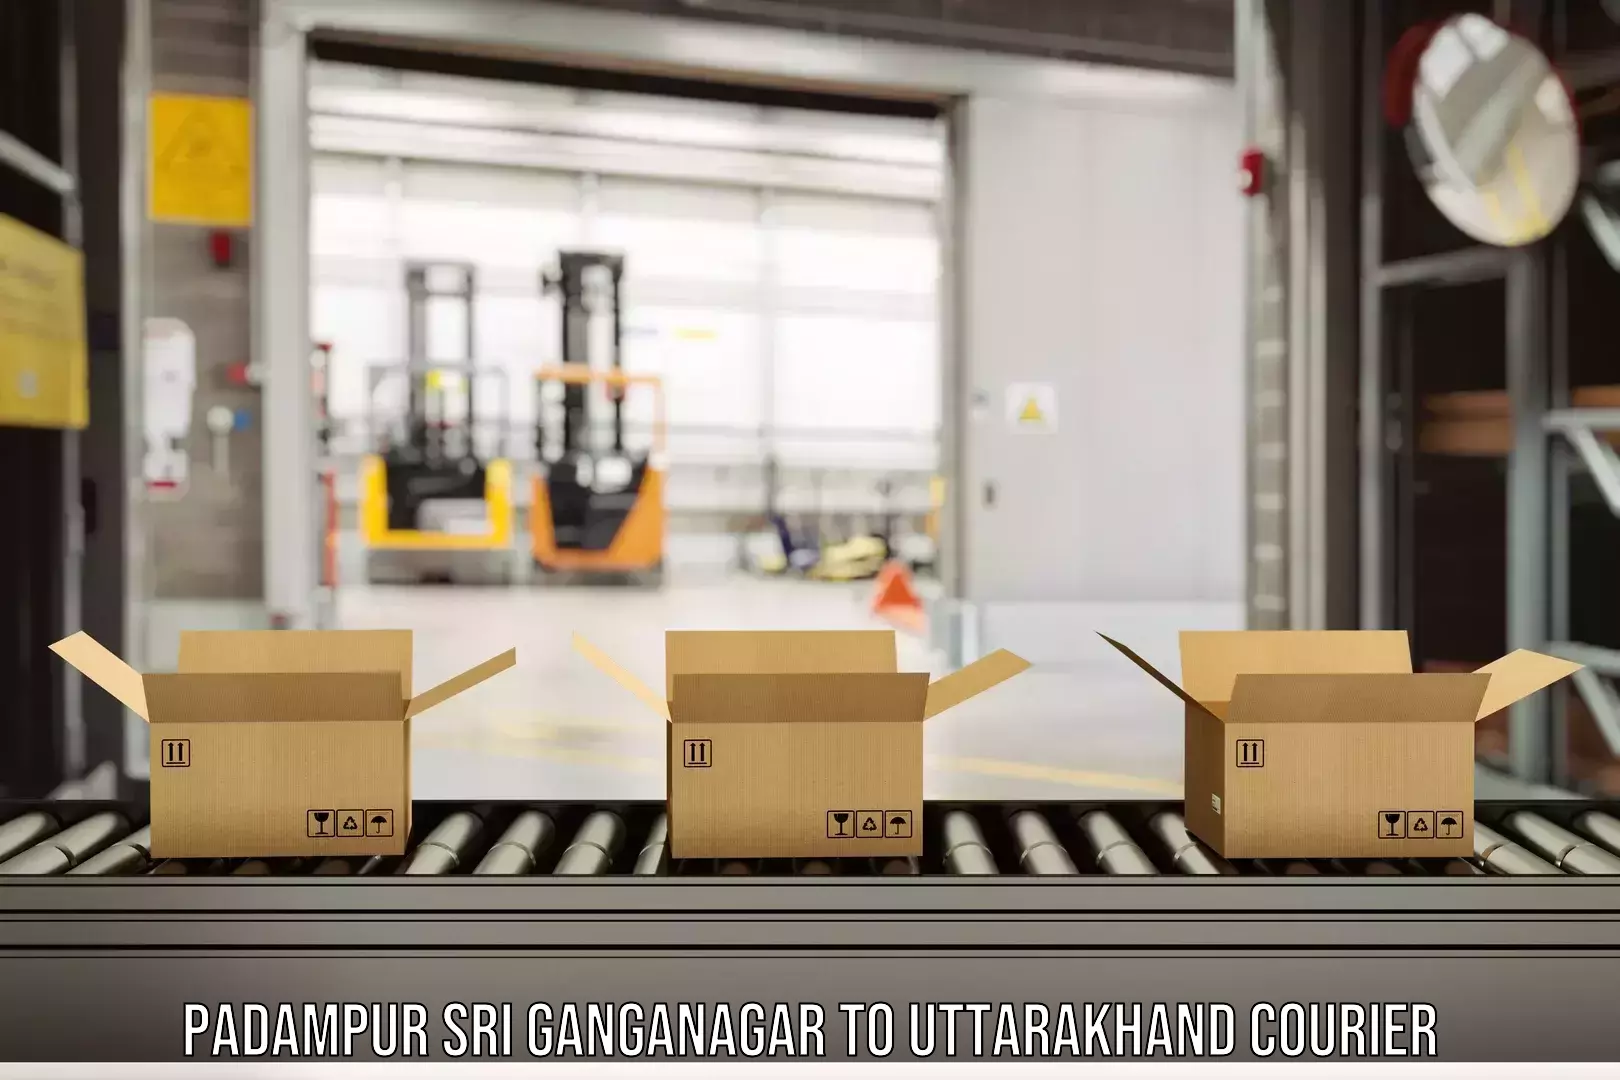 Fast-track shipping solutions Padampur Sri Ganganagar to IIT Roorkee